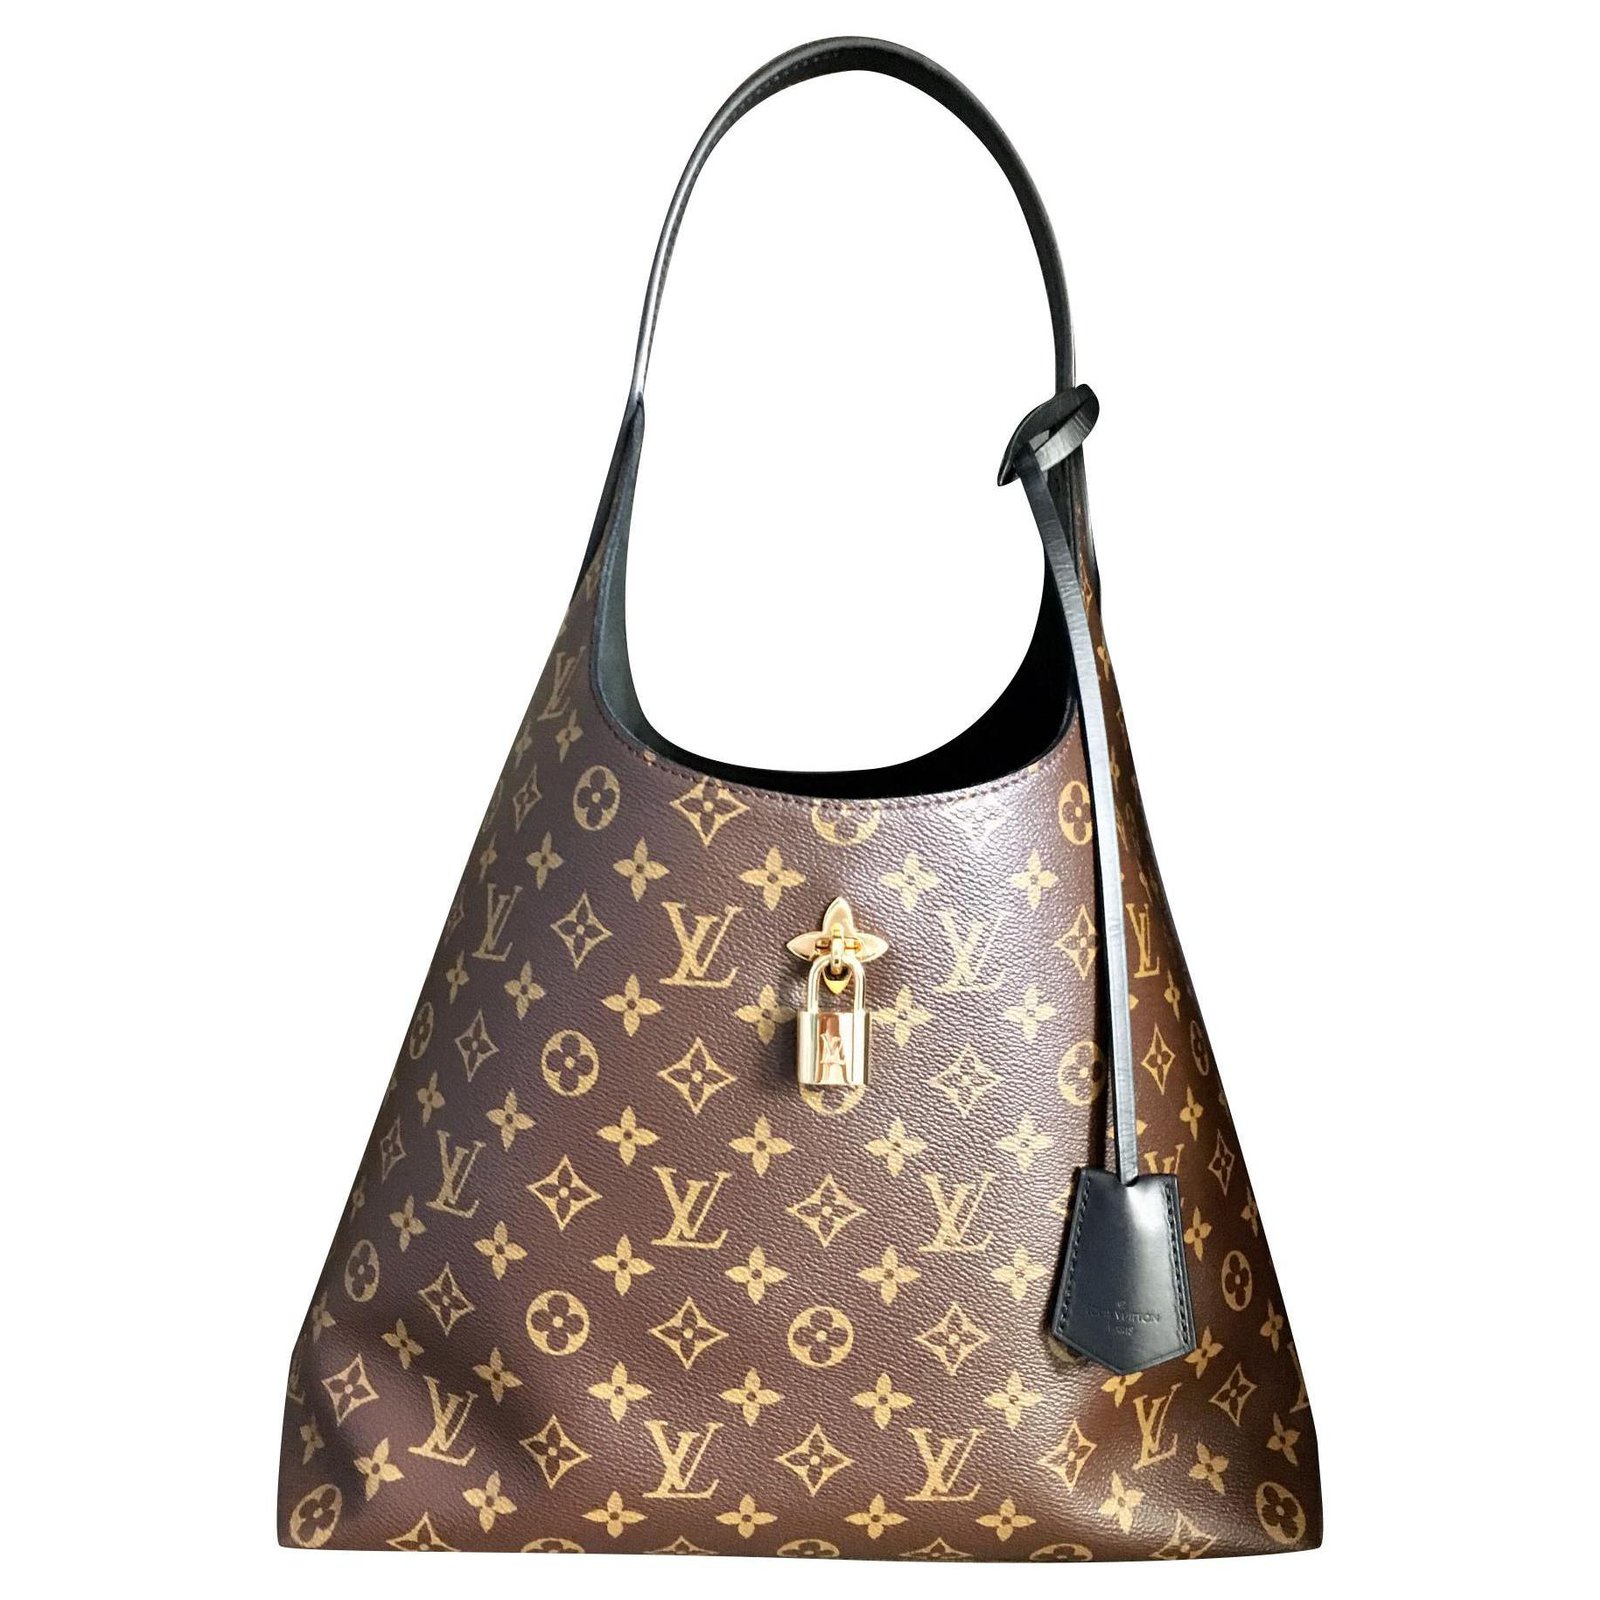 Louis Vuitton flower hobo shoulder bag